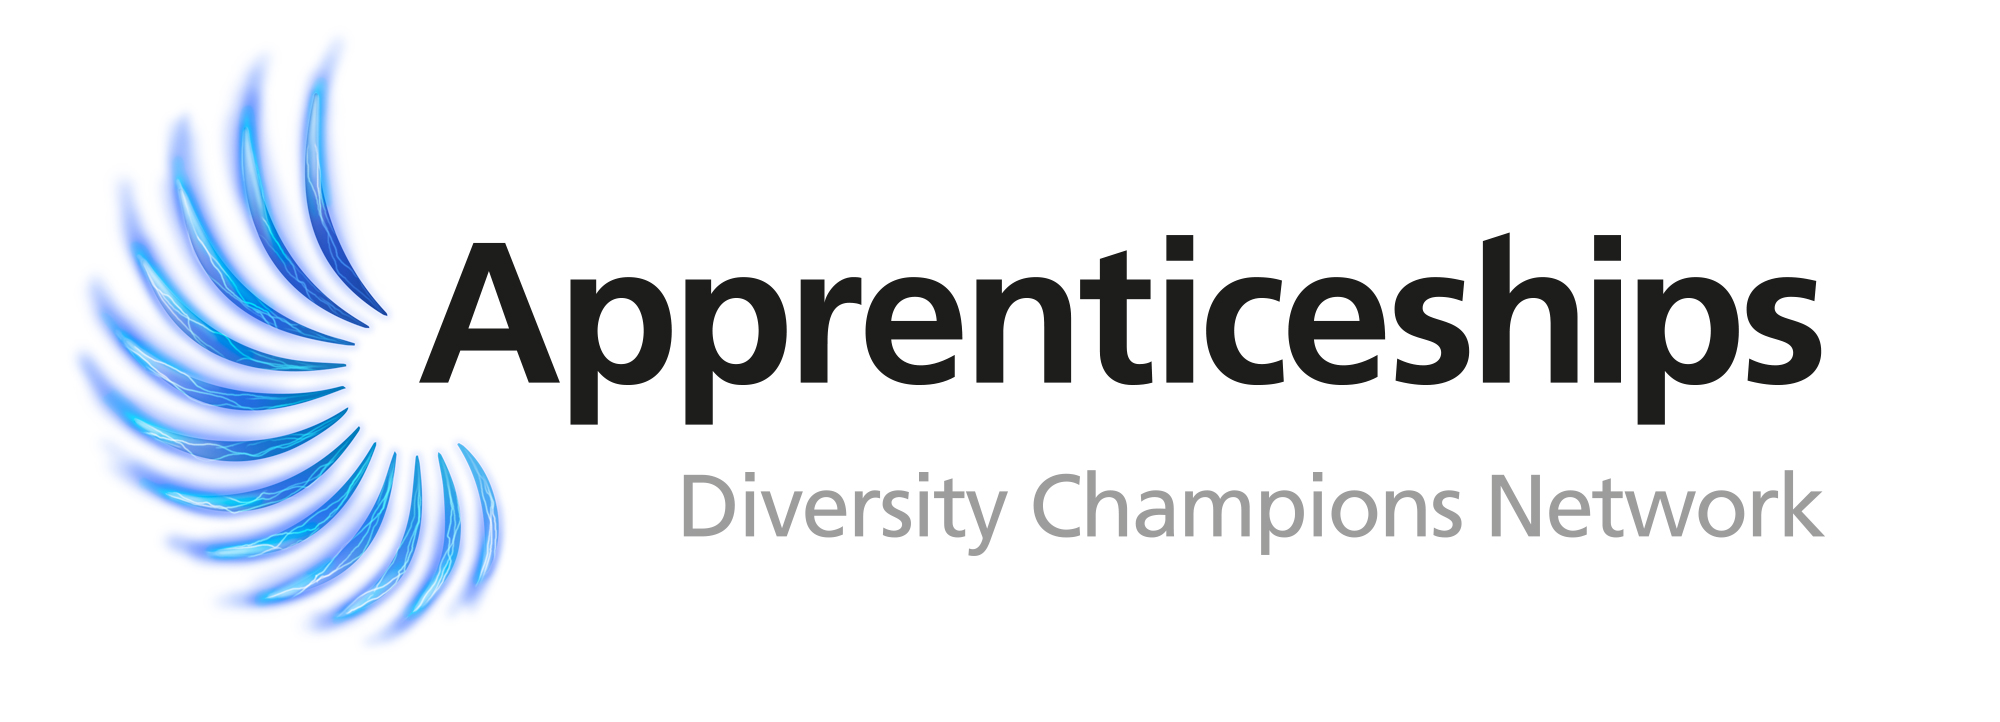 Apprenticeships Diversity Champions Network Logo